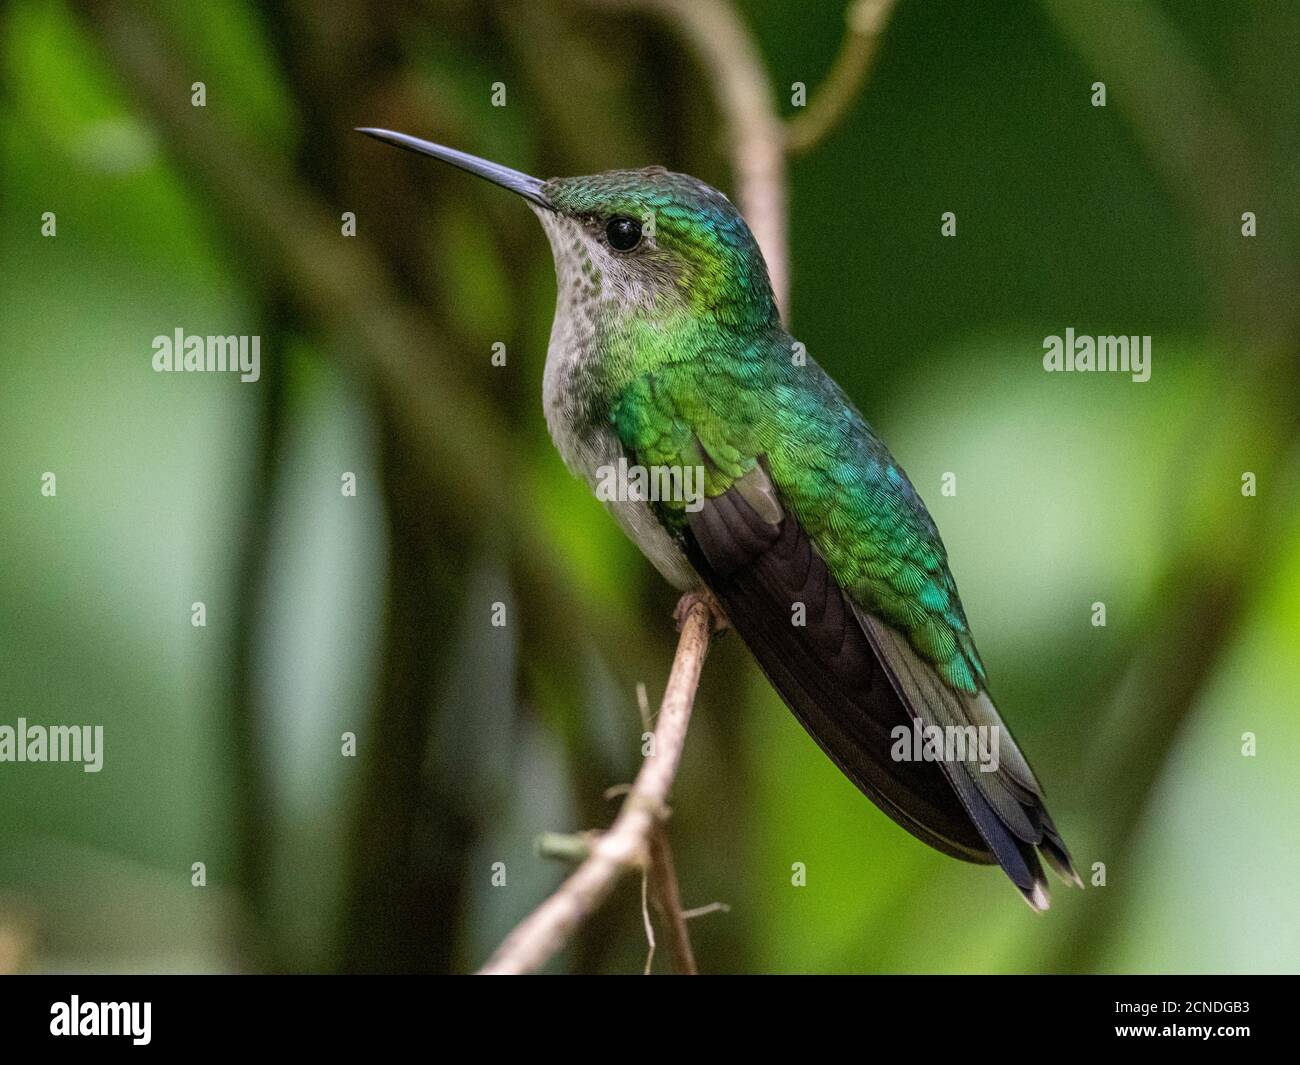 Smeraldo polemico (Chrysuronia versicolor), Parque das Aves, Foz do Iguacu, Parana state, Brasile Foto Stock